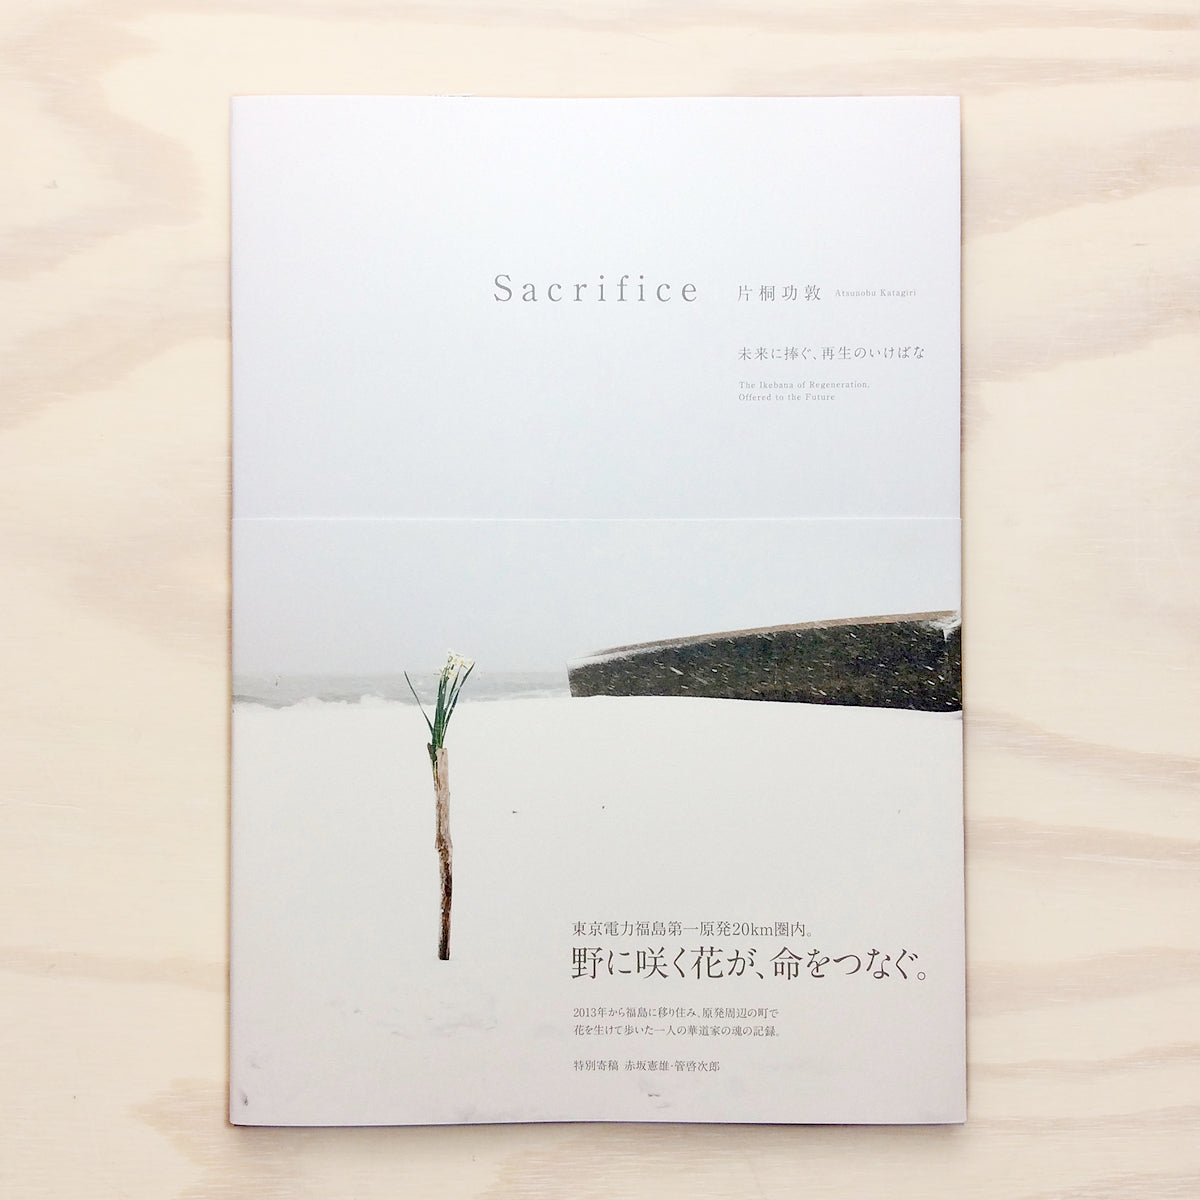 Sacrifice - The Ikebana of Regeneration, Offered to the Future -